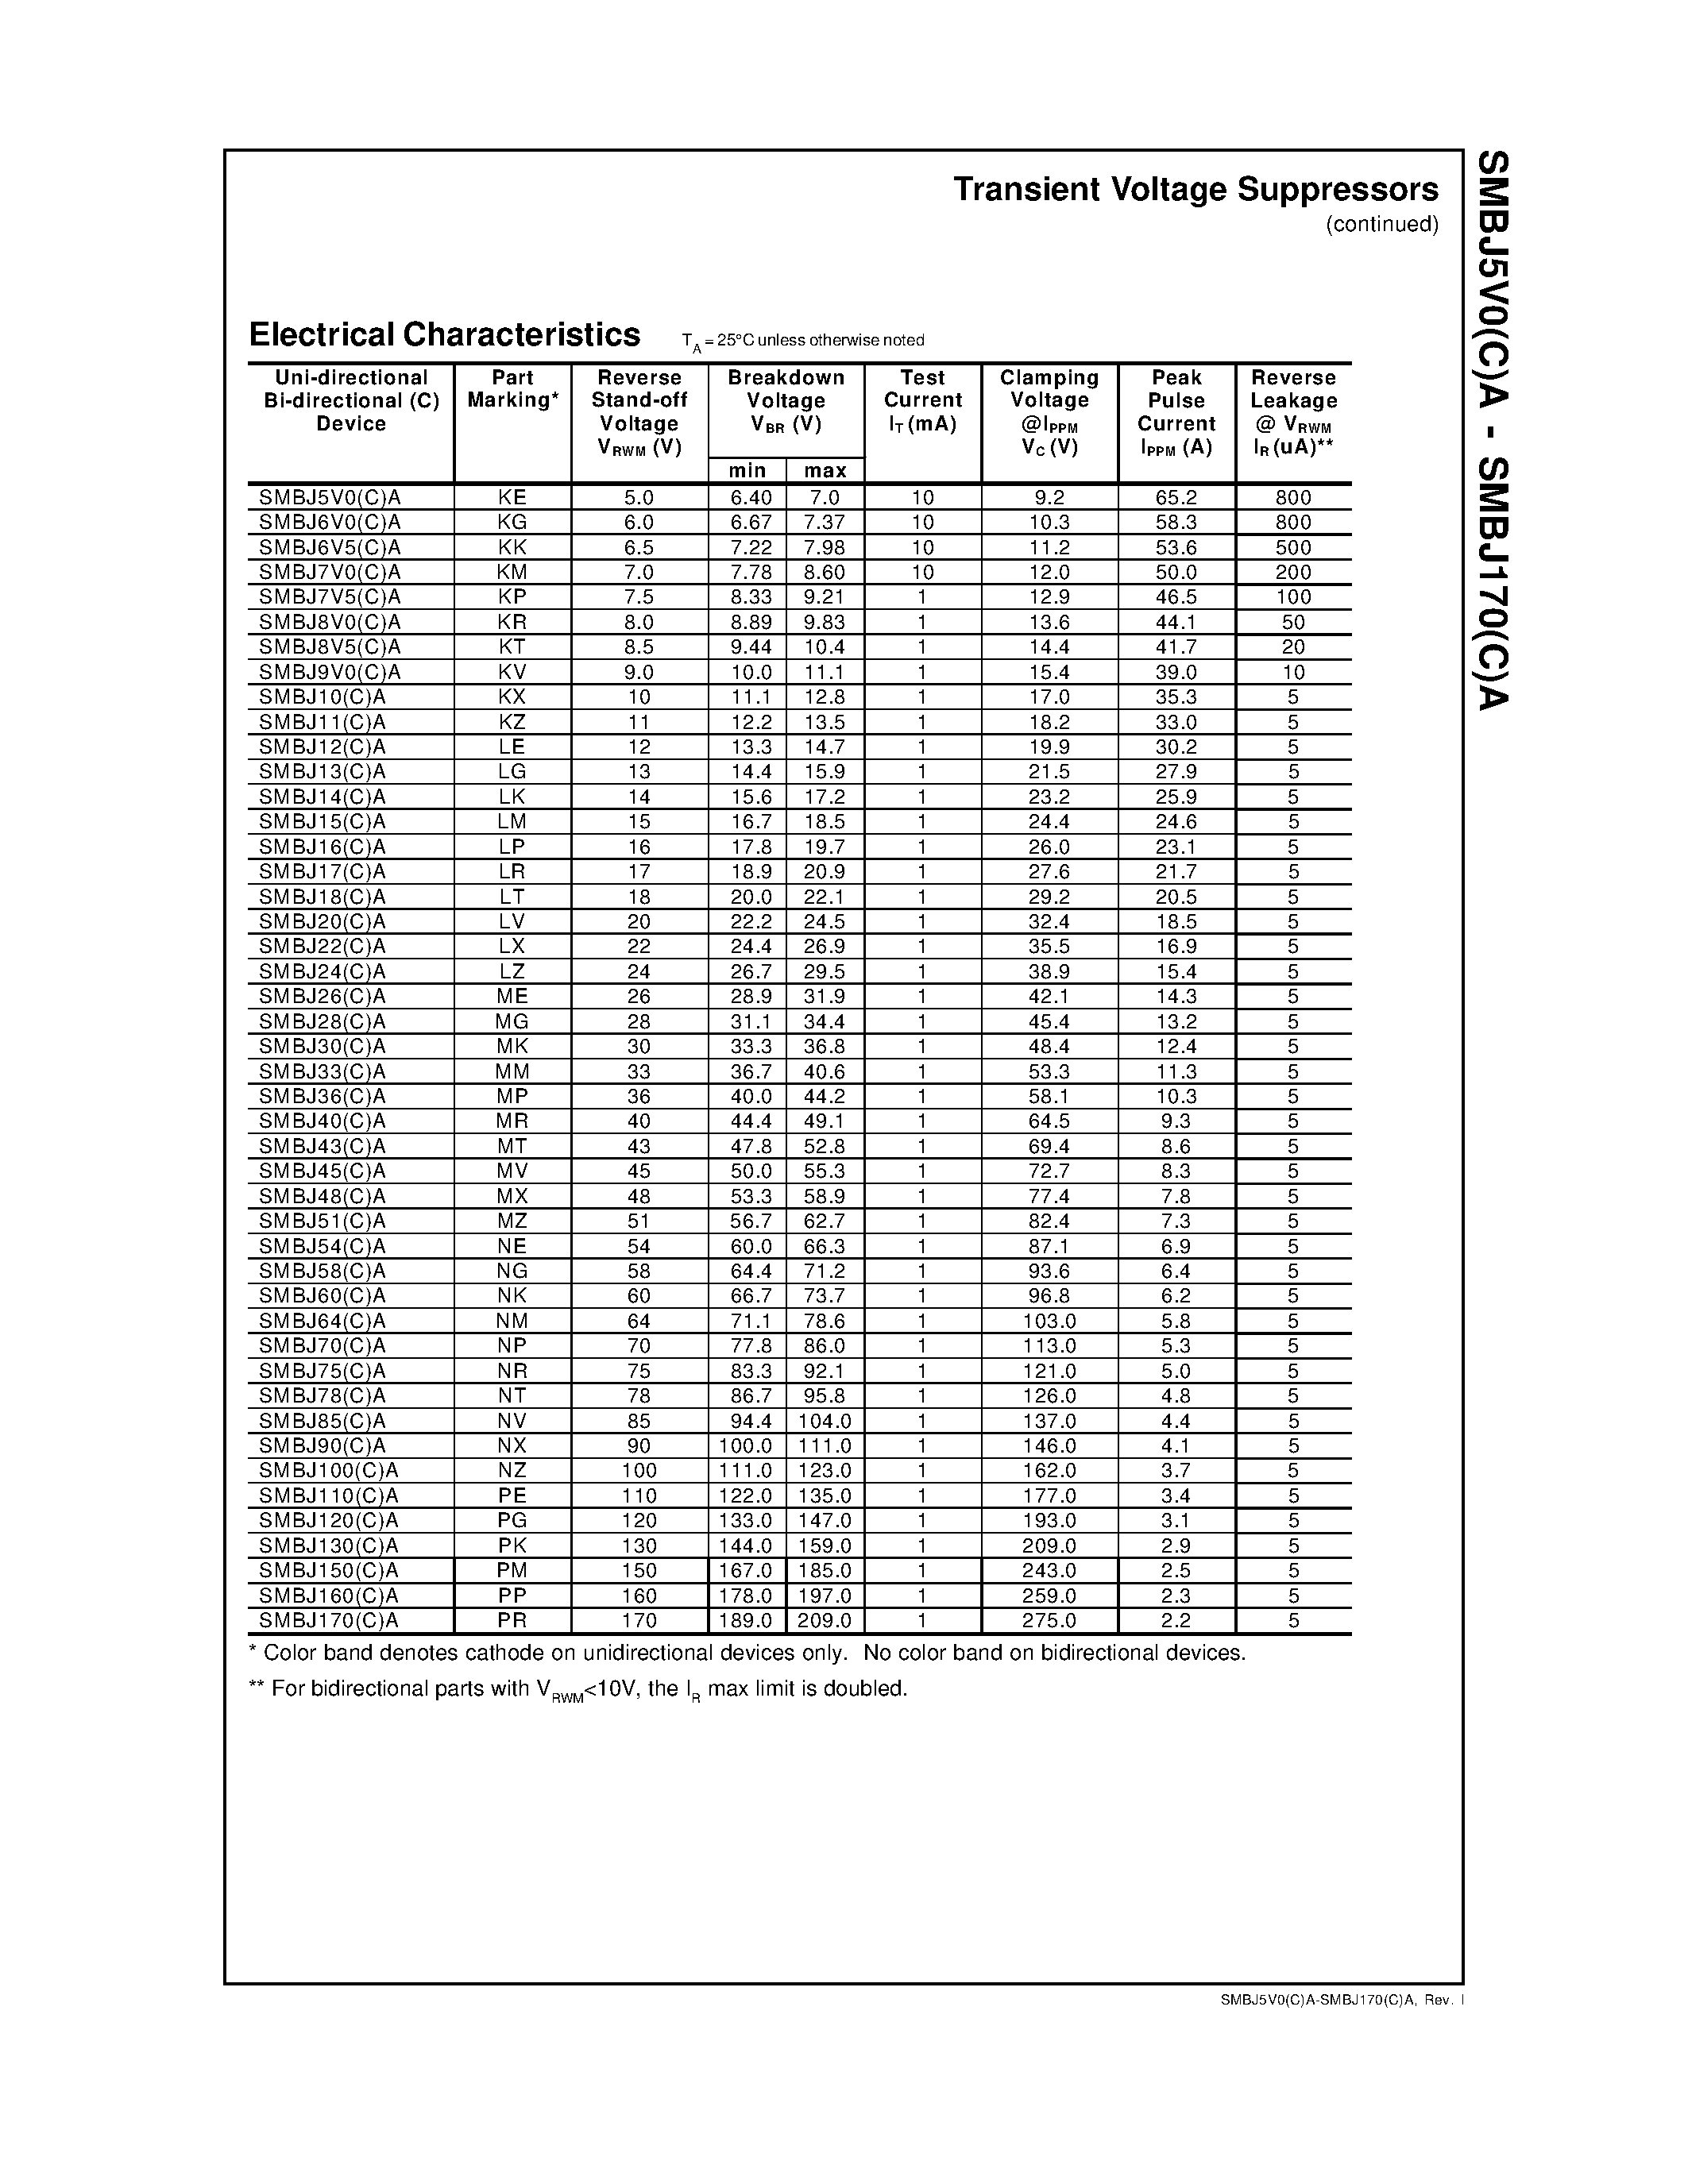 Datasheet SMBJ110A - Transient Voltage Suppressors SMBJ5V0(C)A - SMBJ170(C)A page 2